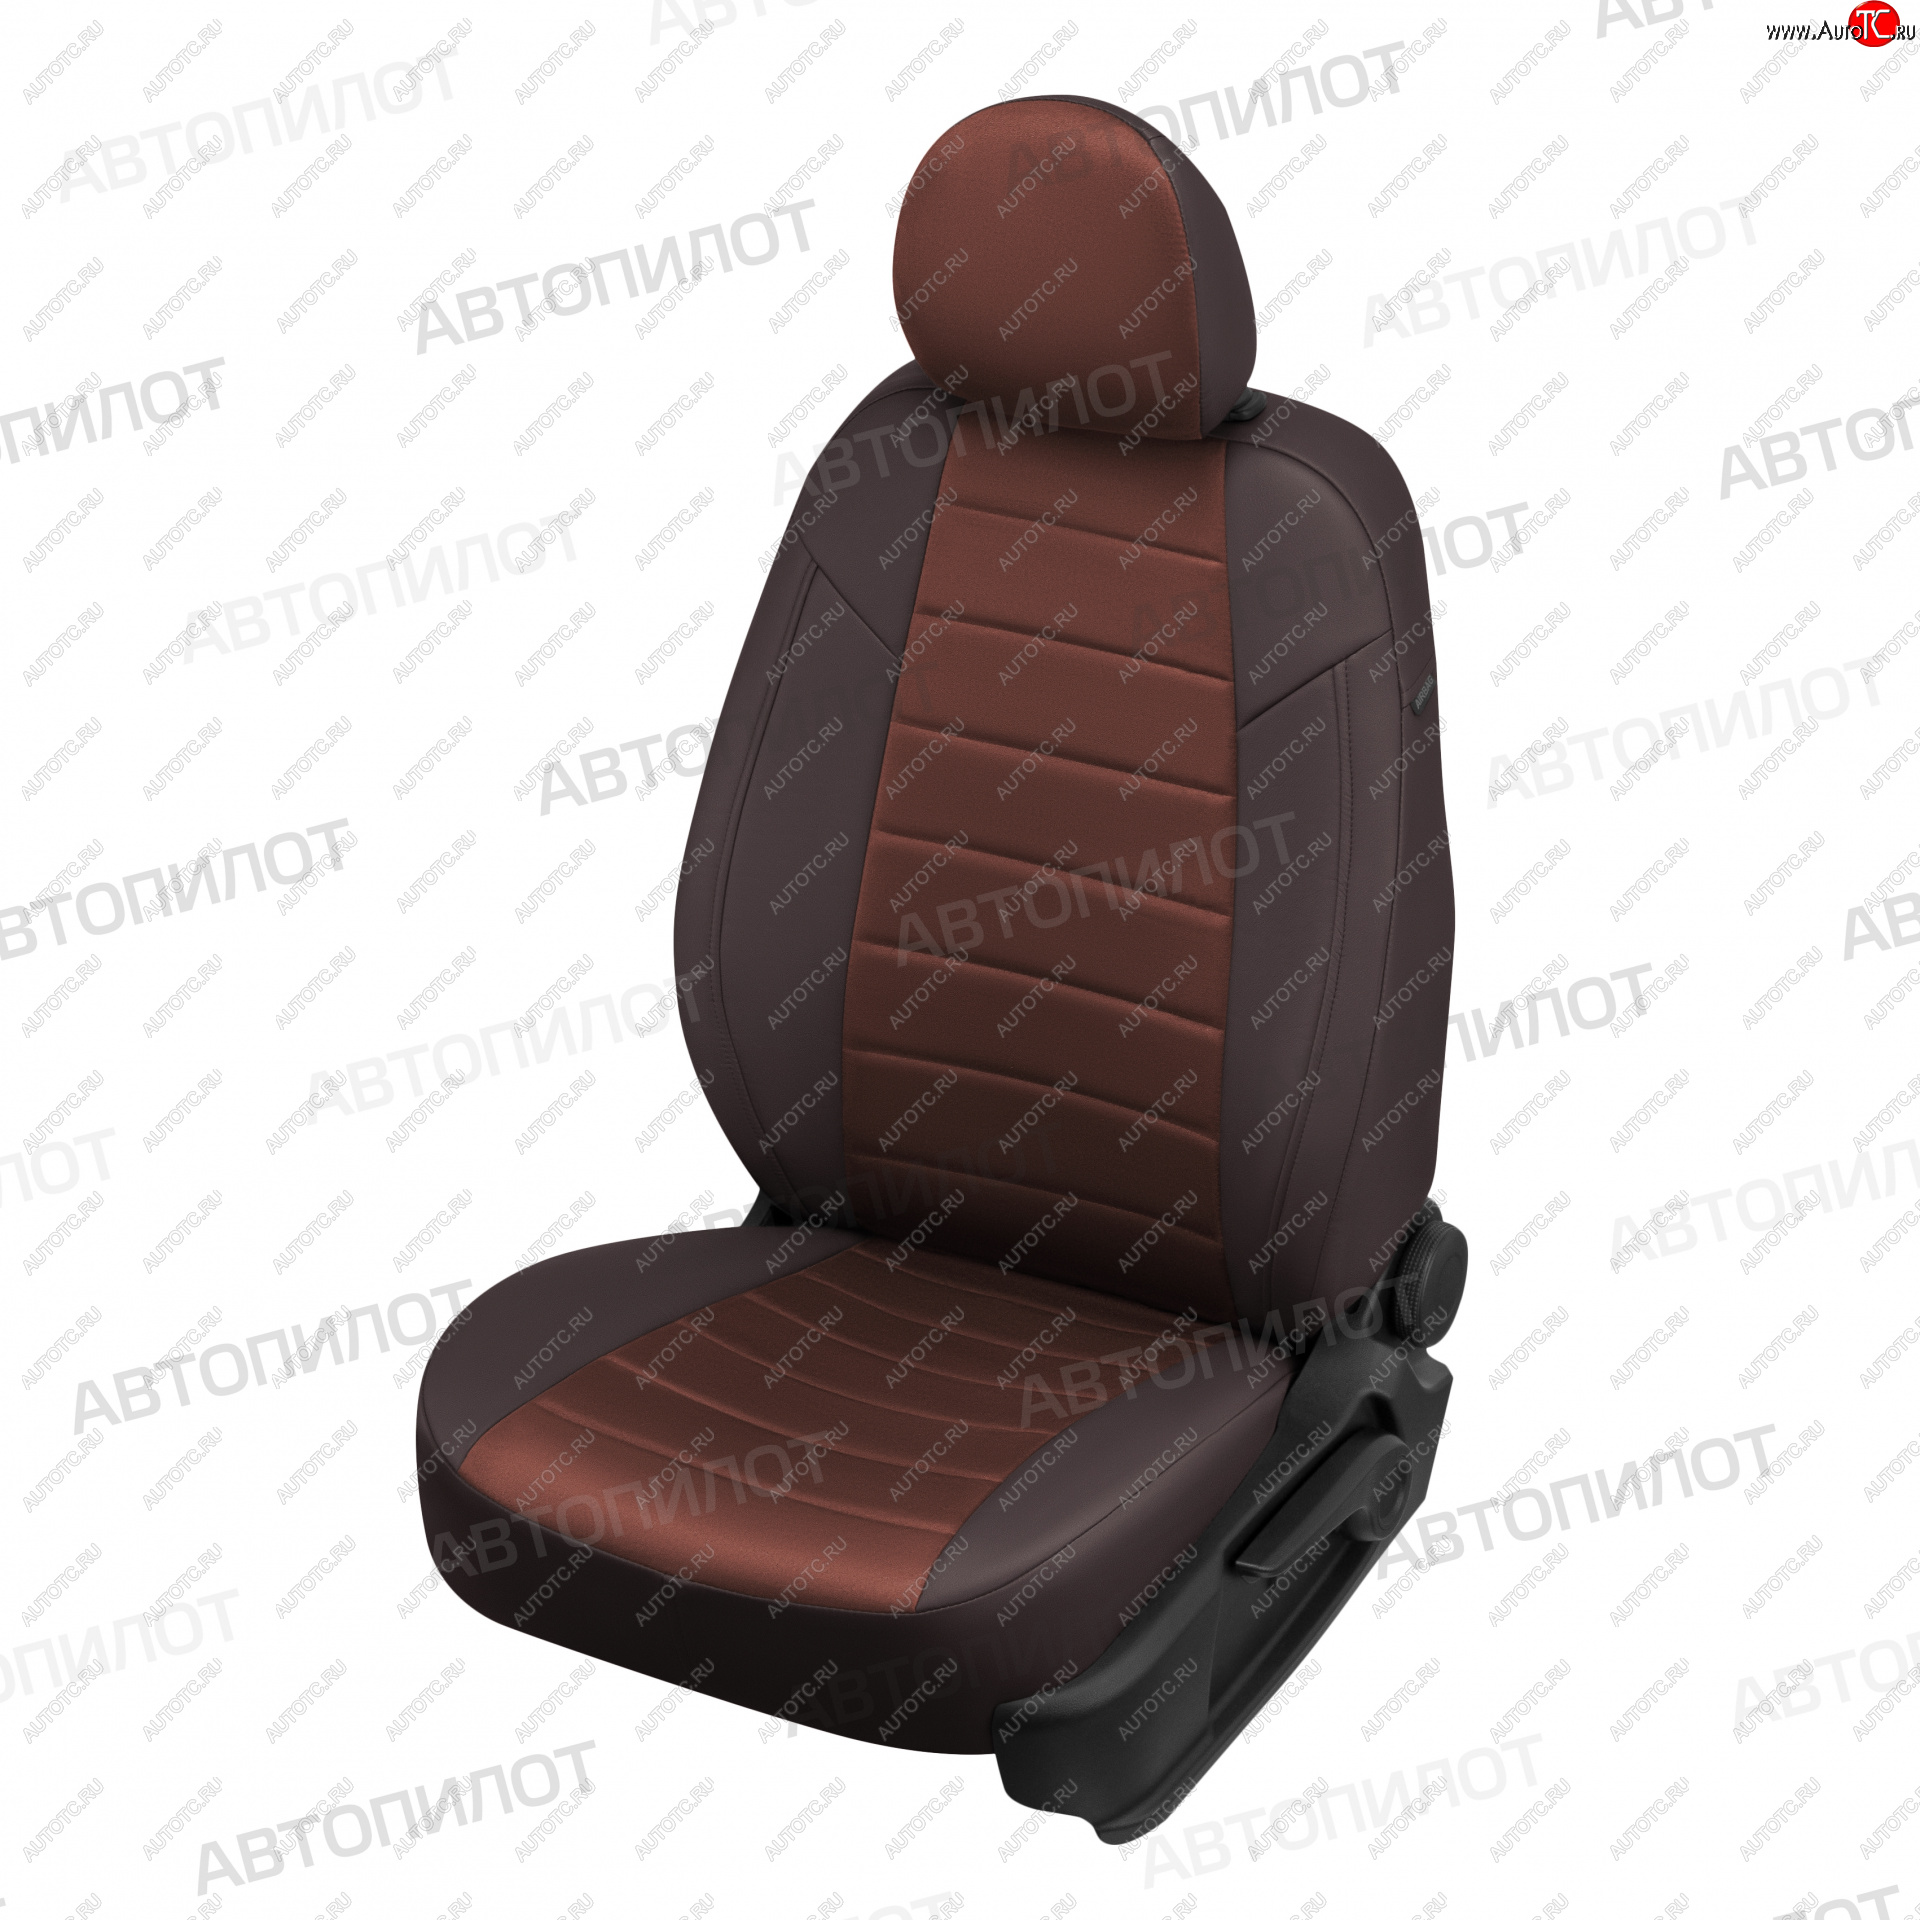 13 449 р. Чехлы сидений (экокожа/алькантара) Автопилот  Fiat Bravo  198 (2007-2015) (шоколад)